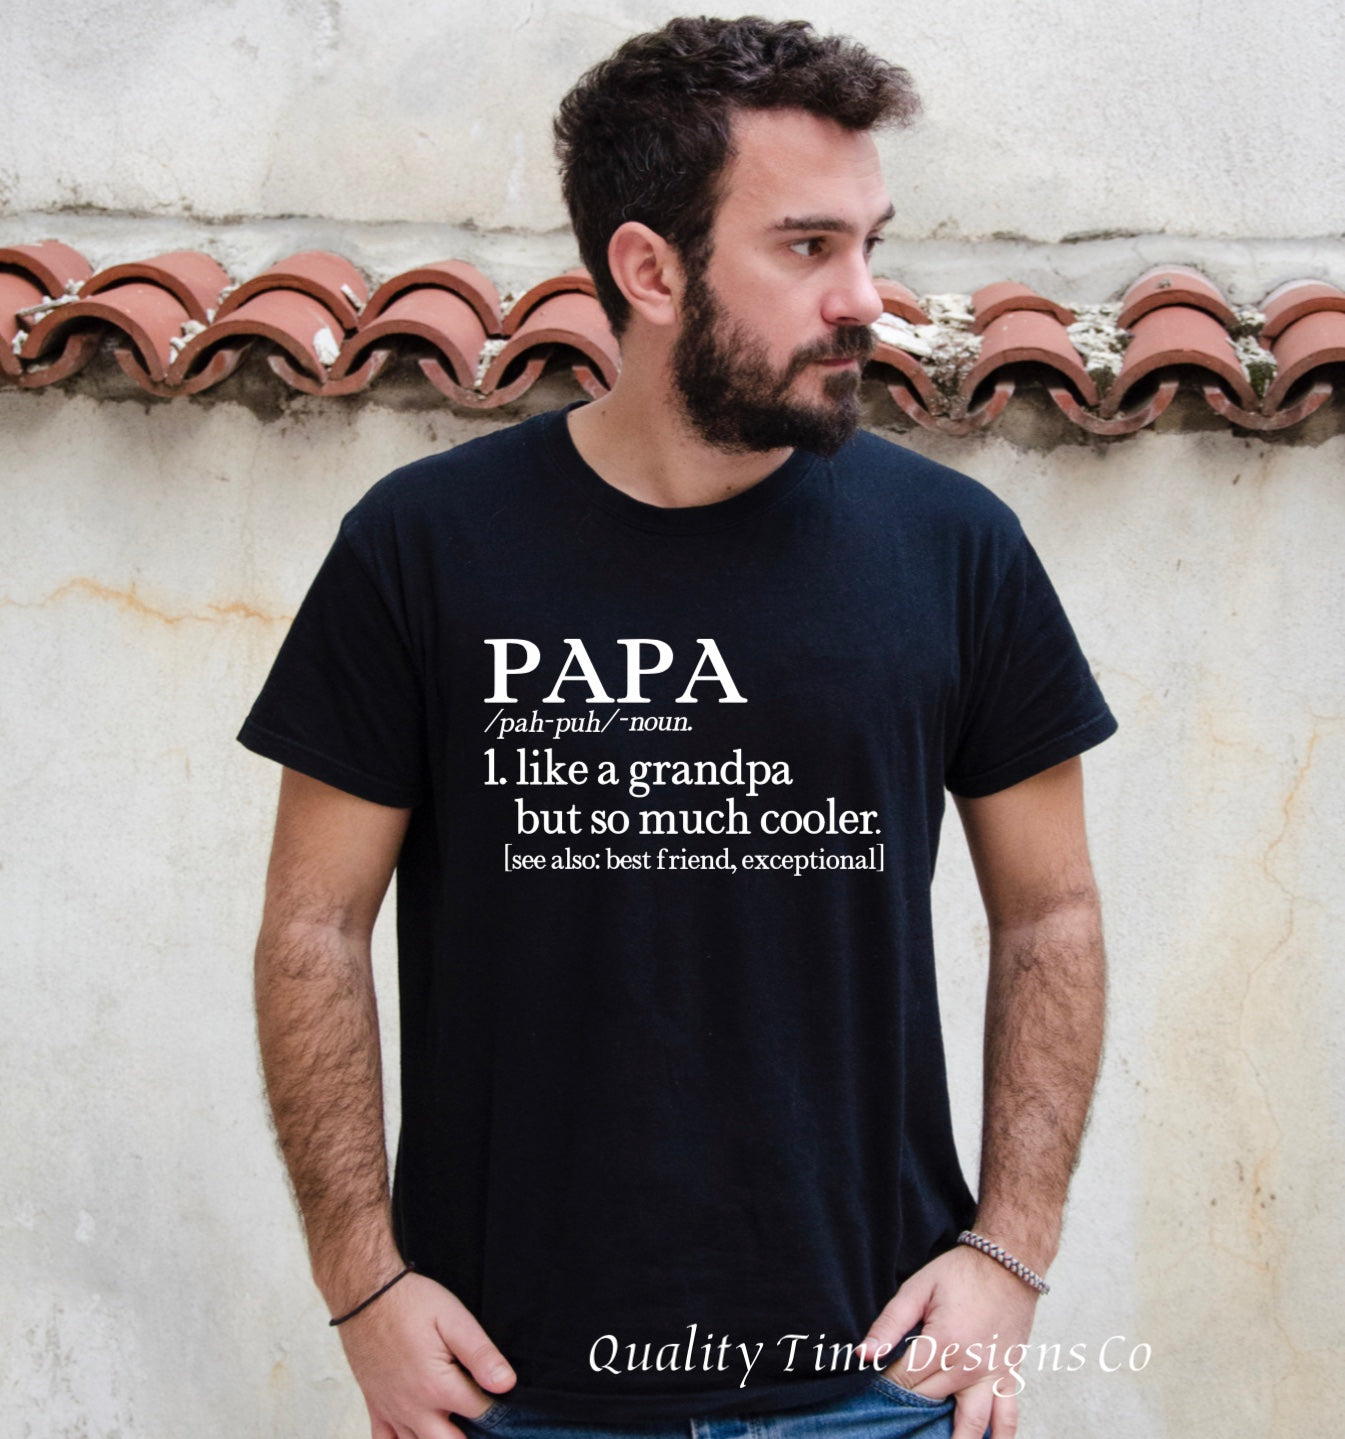 Papa definition t shirt